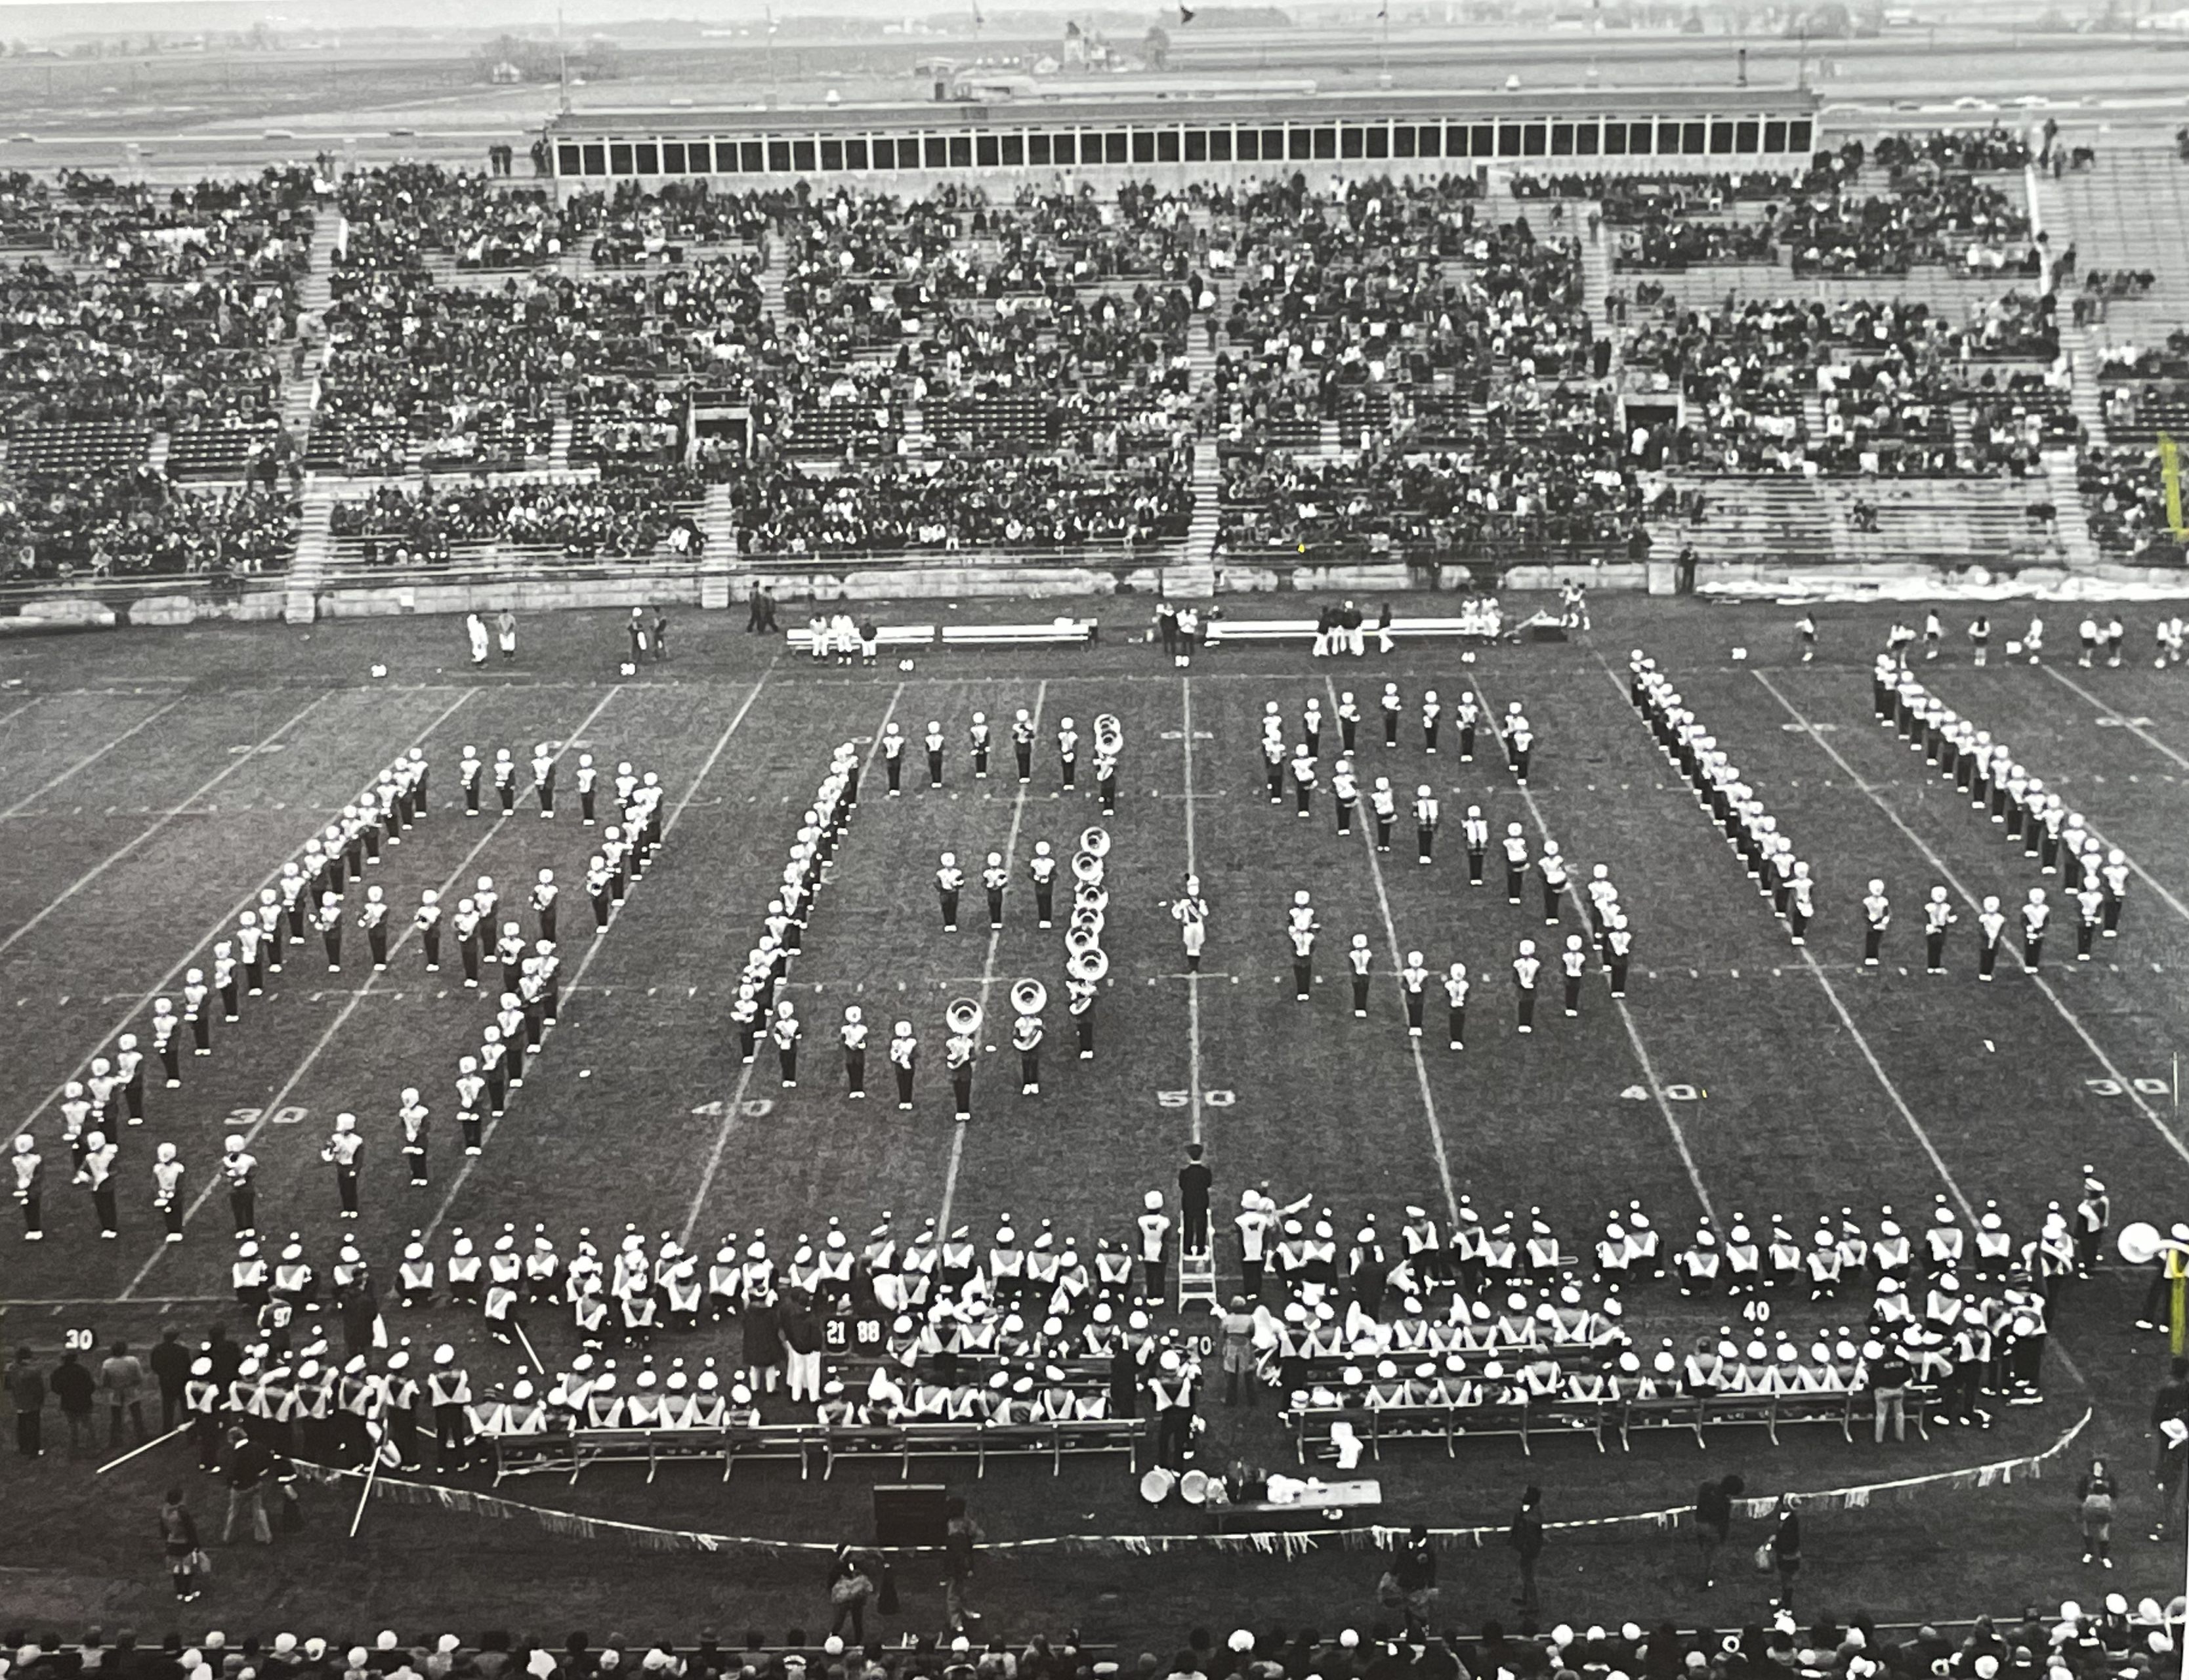 BGSU marching band members form the letters BGSU on a football field 